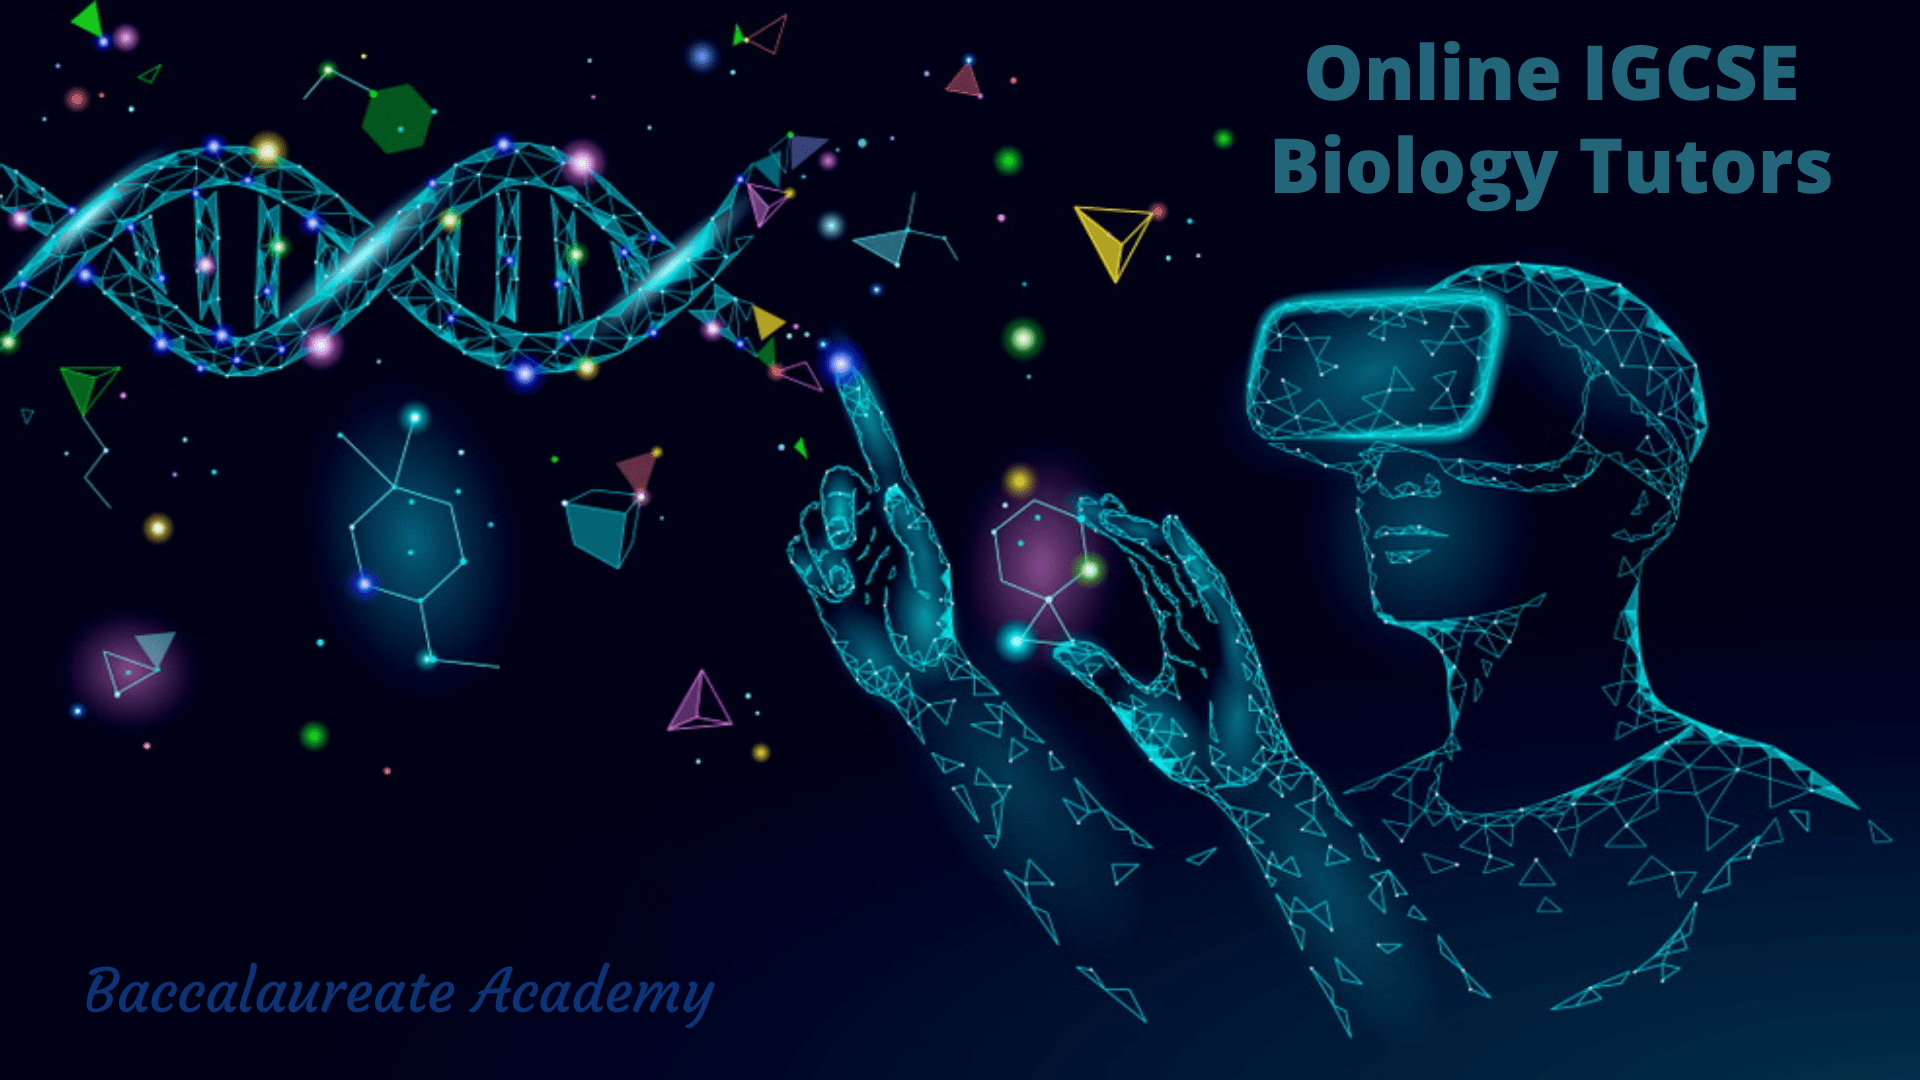 Online IGCSE Biology Tutors | IGCSE Biology Tutors - Baccalaureate Academy